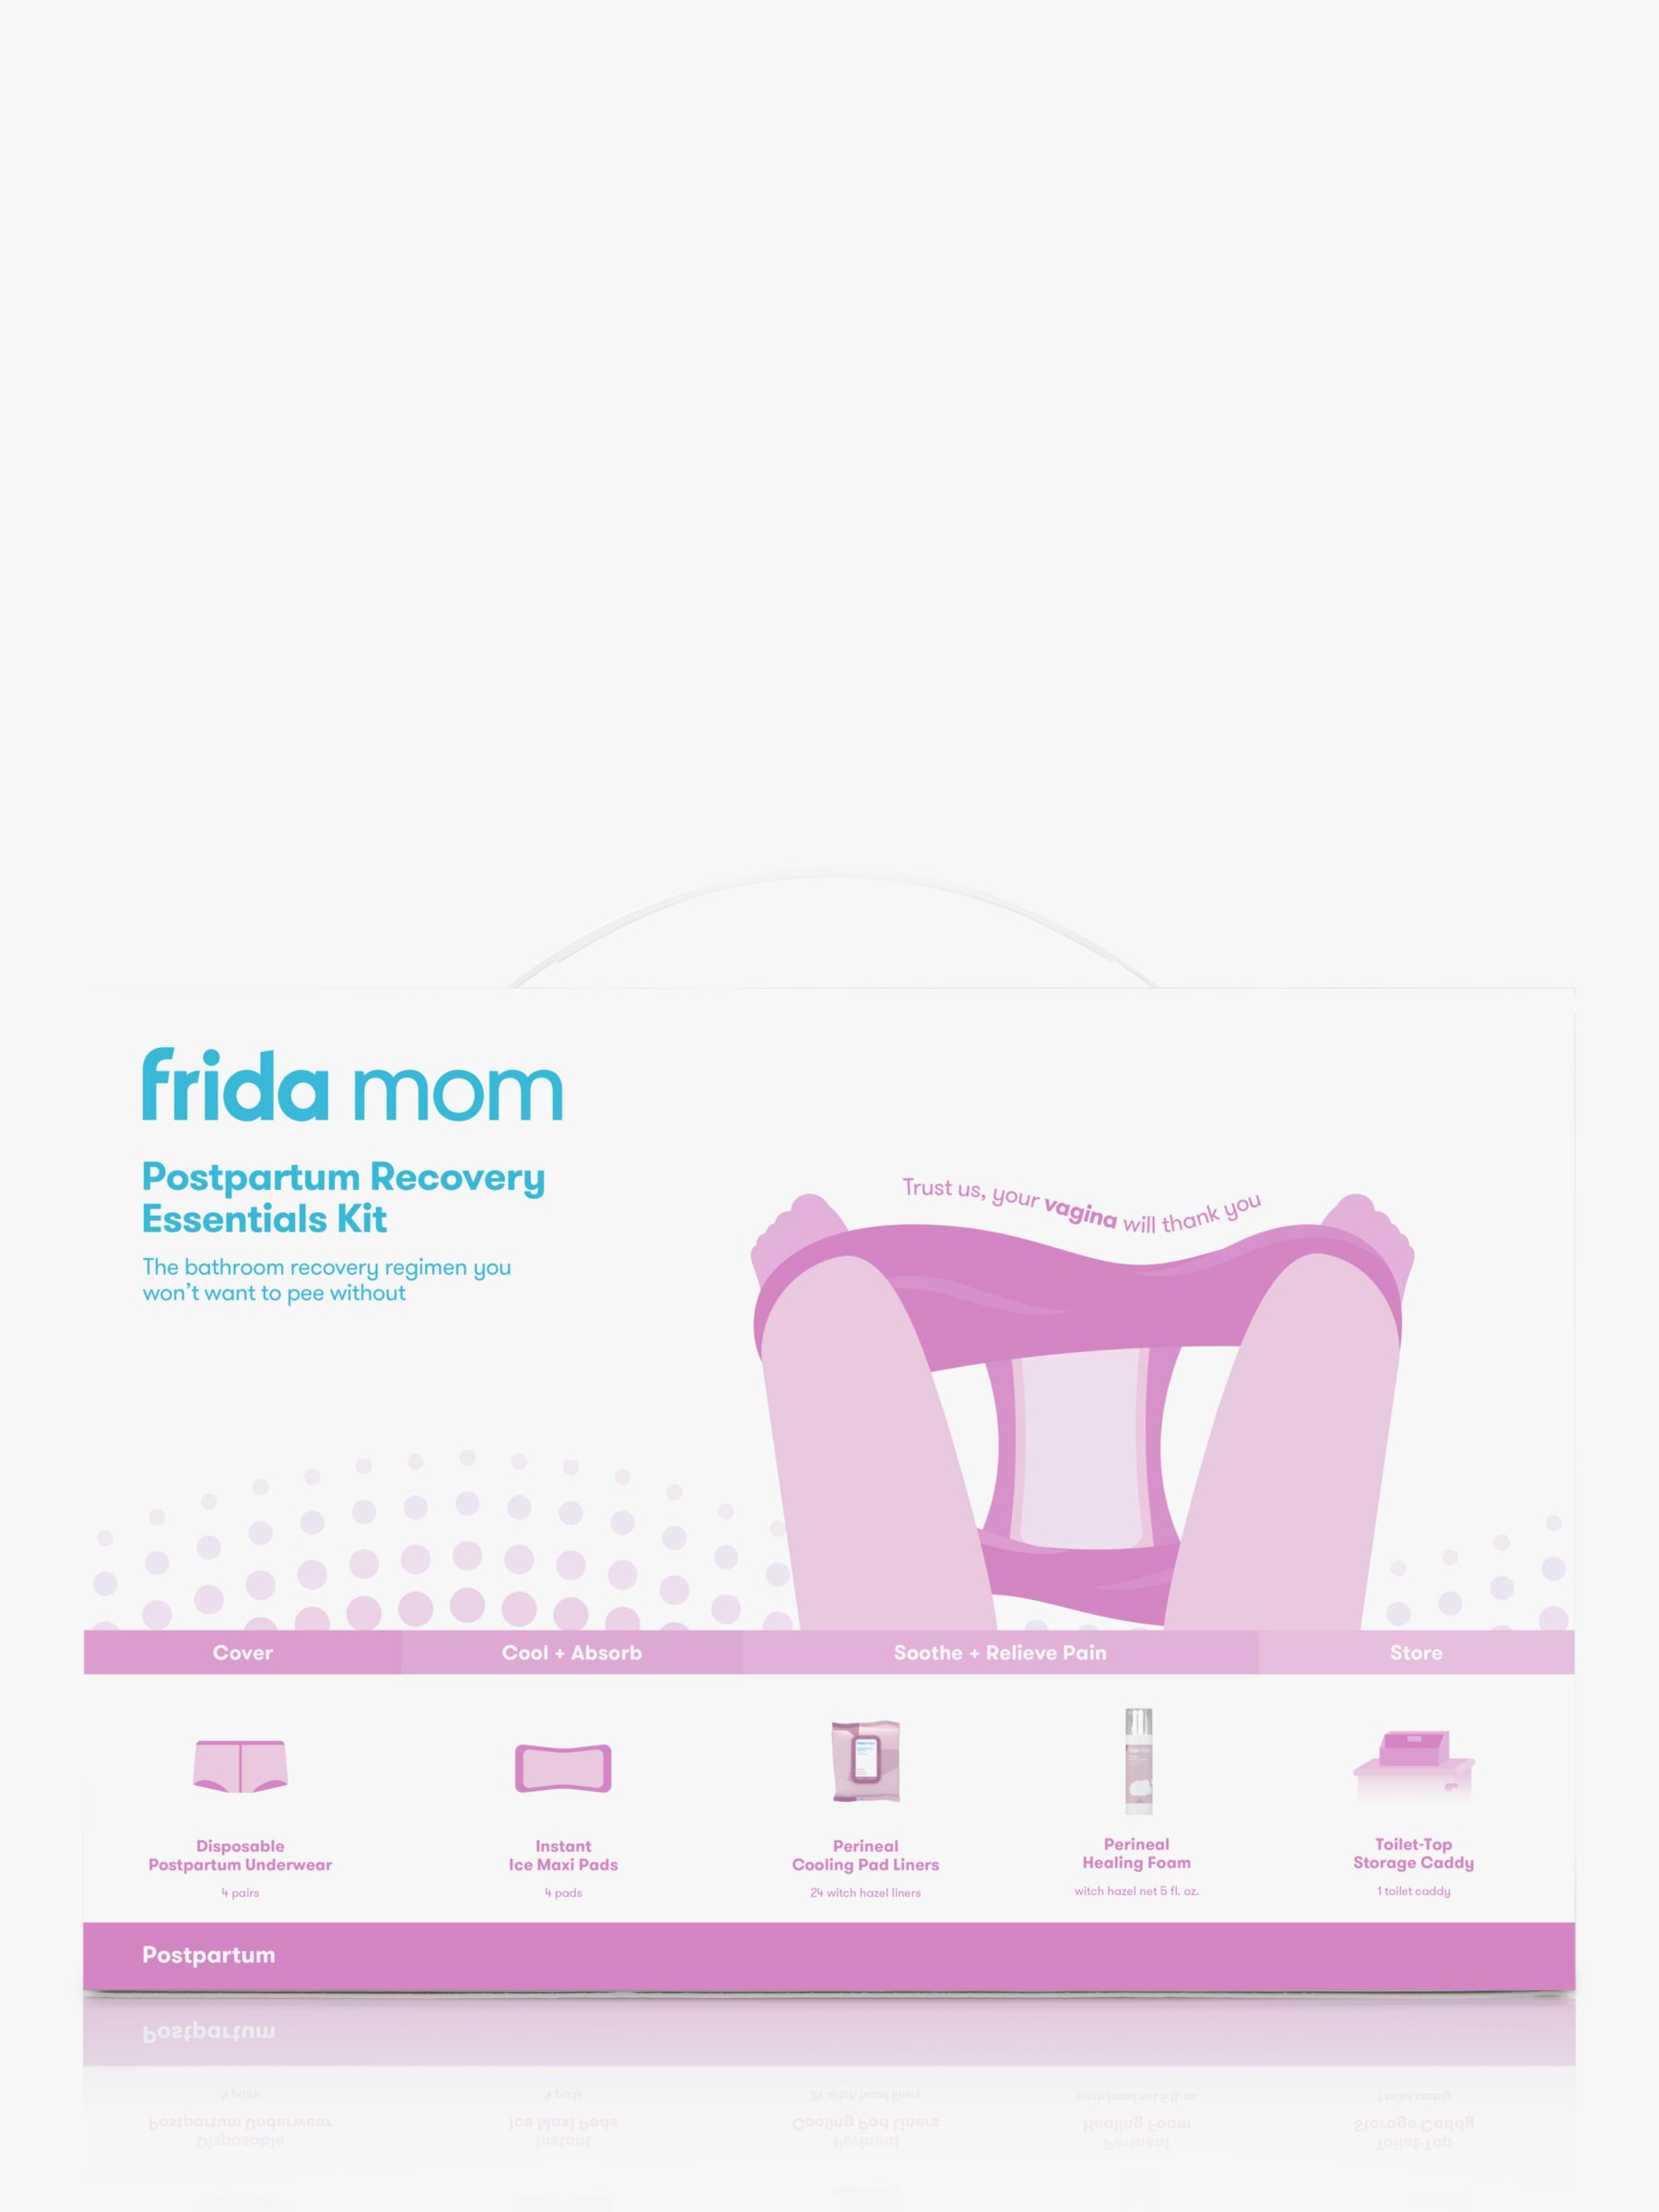 Frida Mom Witch Hazel Perineal Healing Foam – Baby Bump